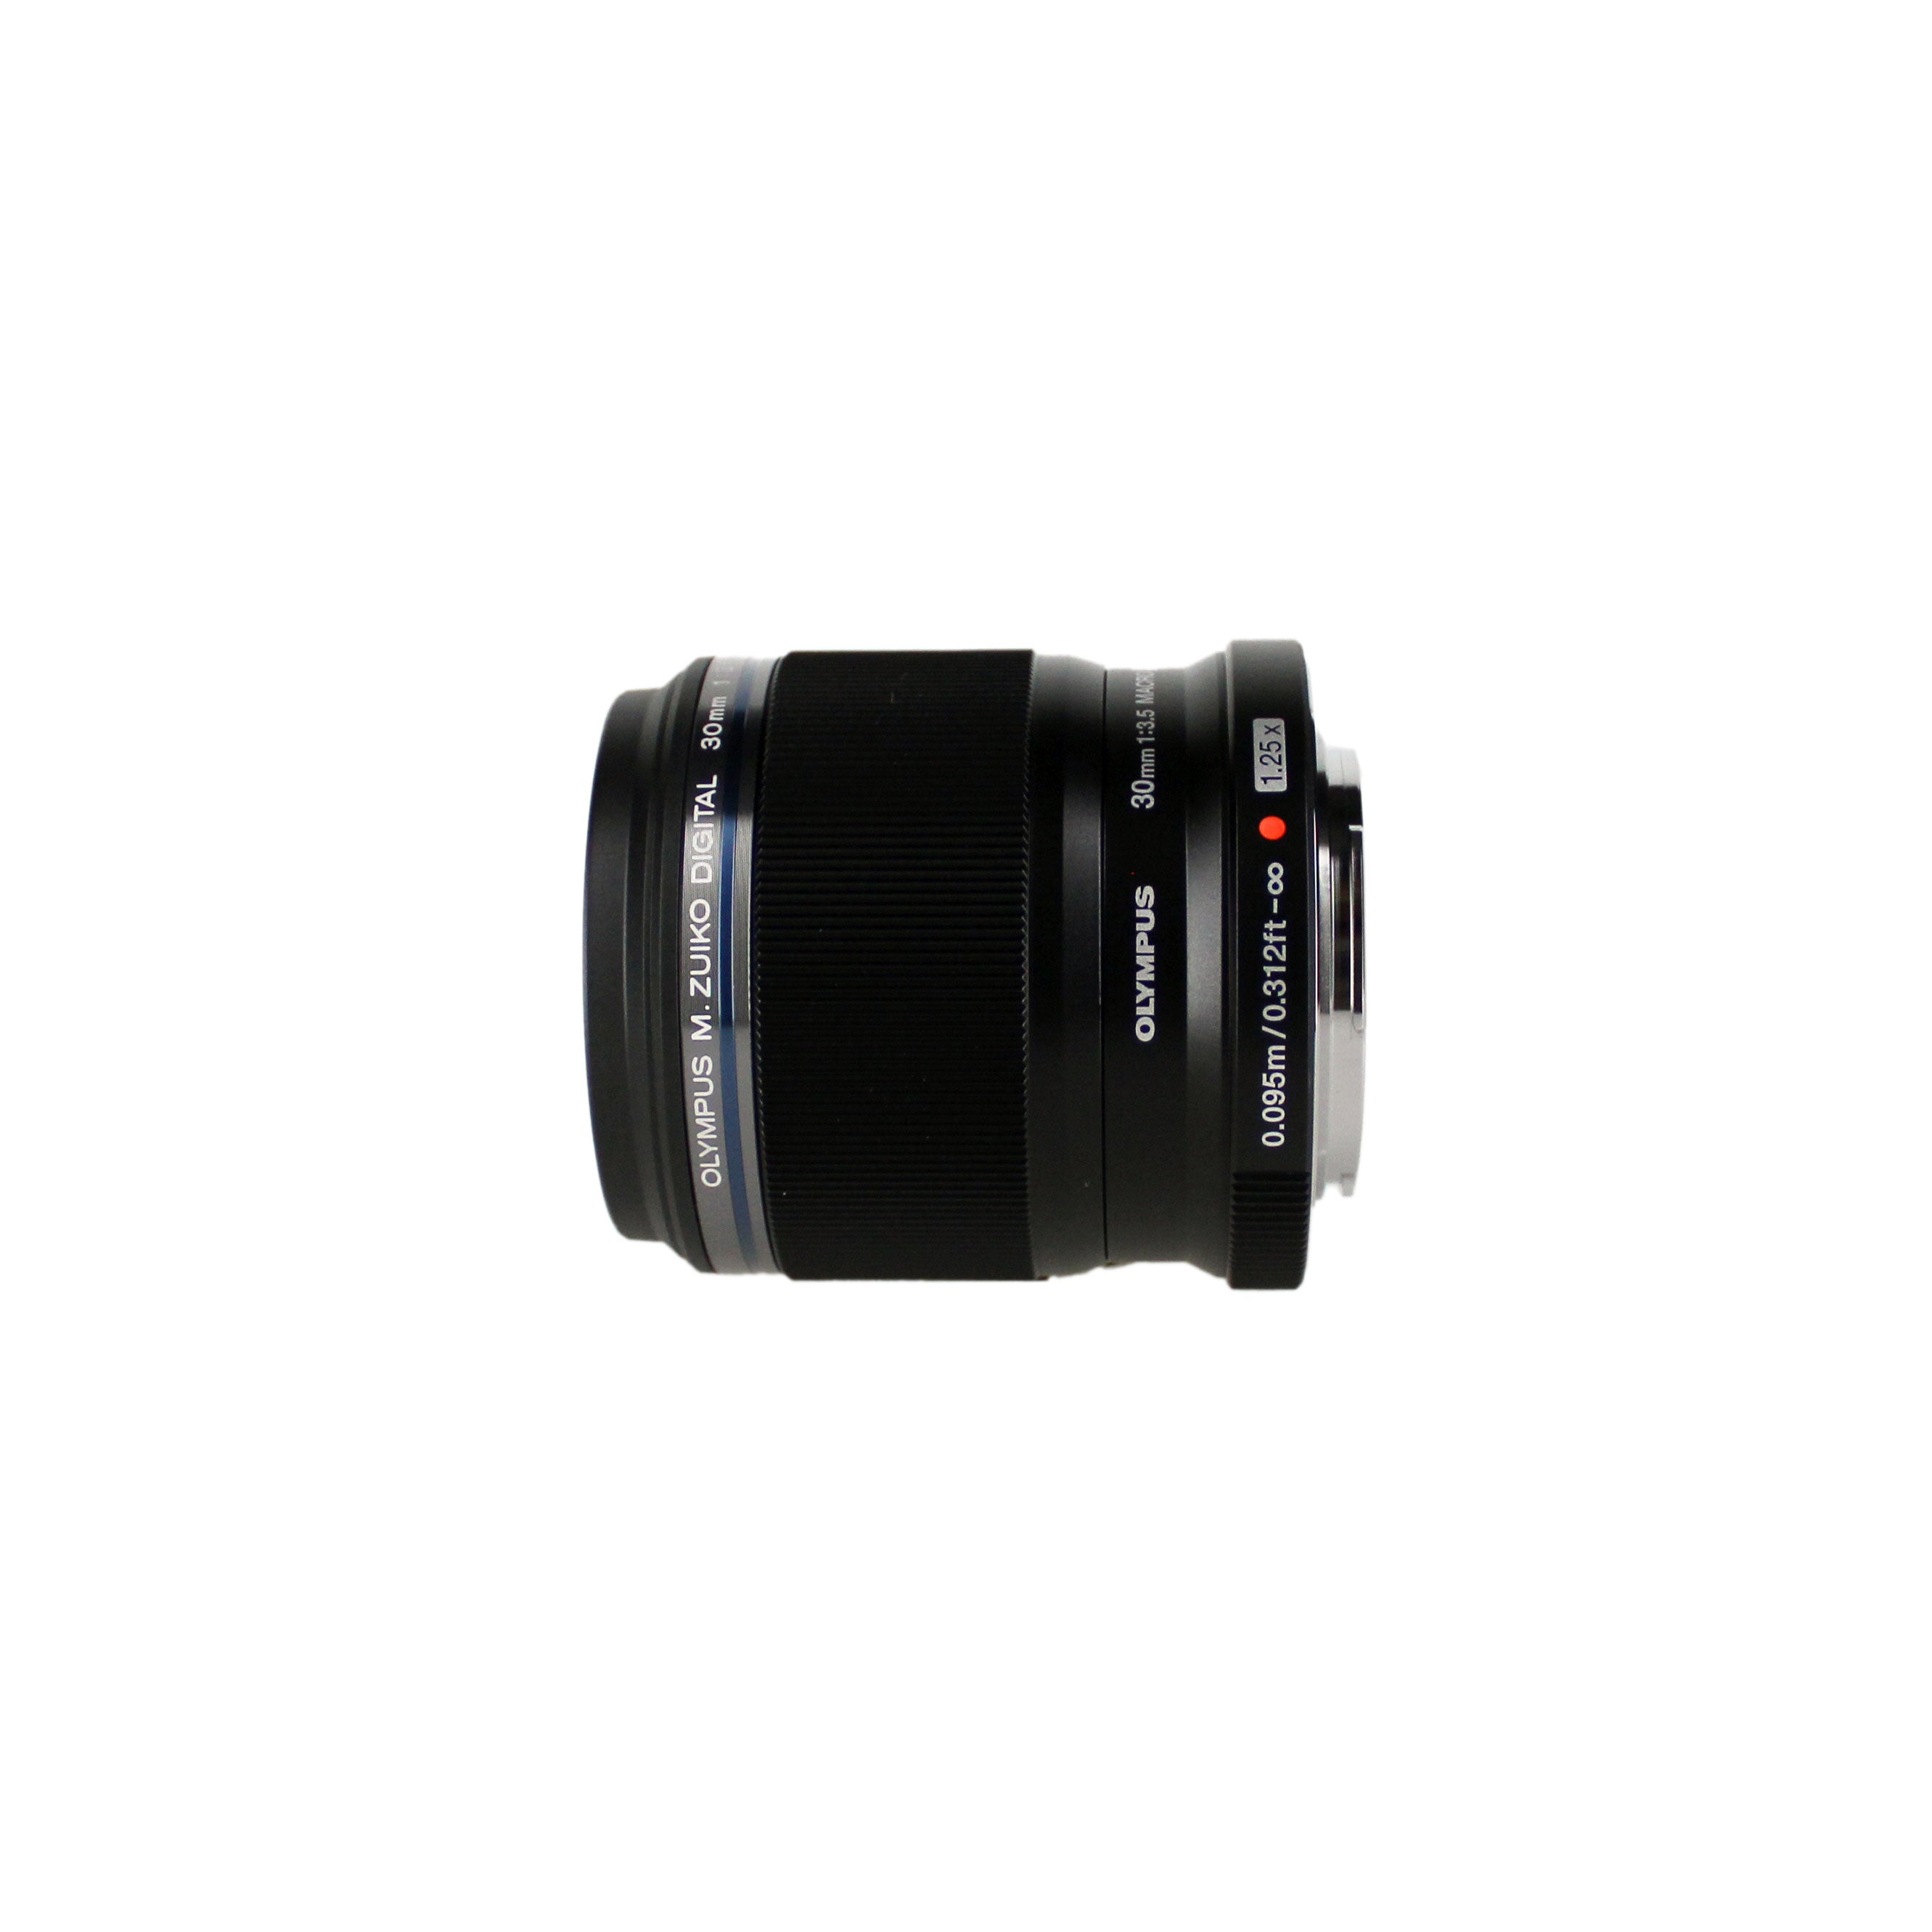 Olympus M.Zuiko Digital ED 30mm F3.5 Macro Lens, for Micro Four Thirds Cameras